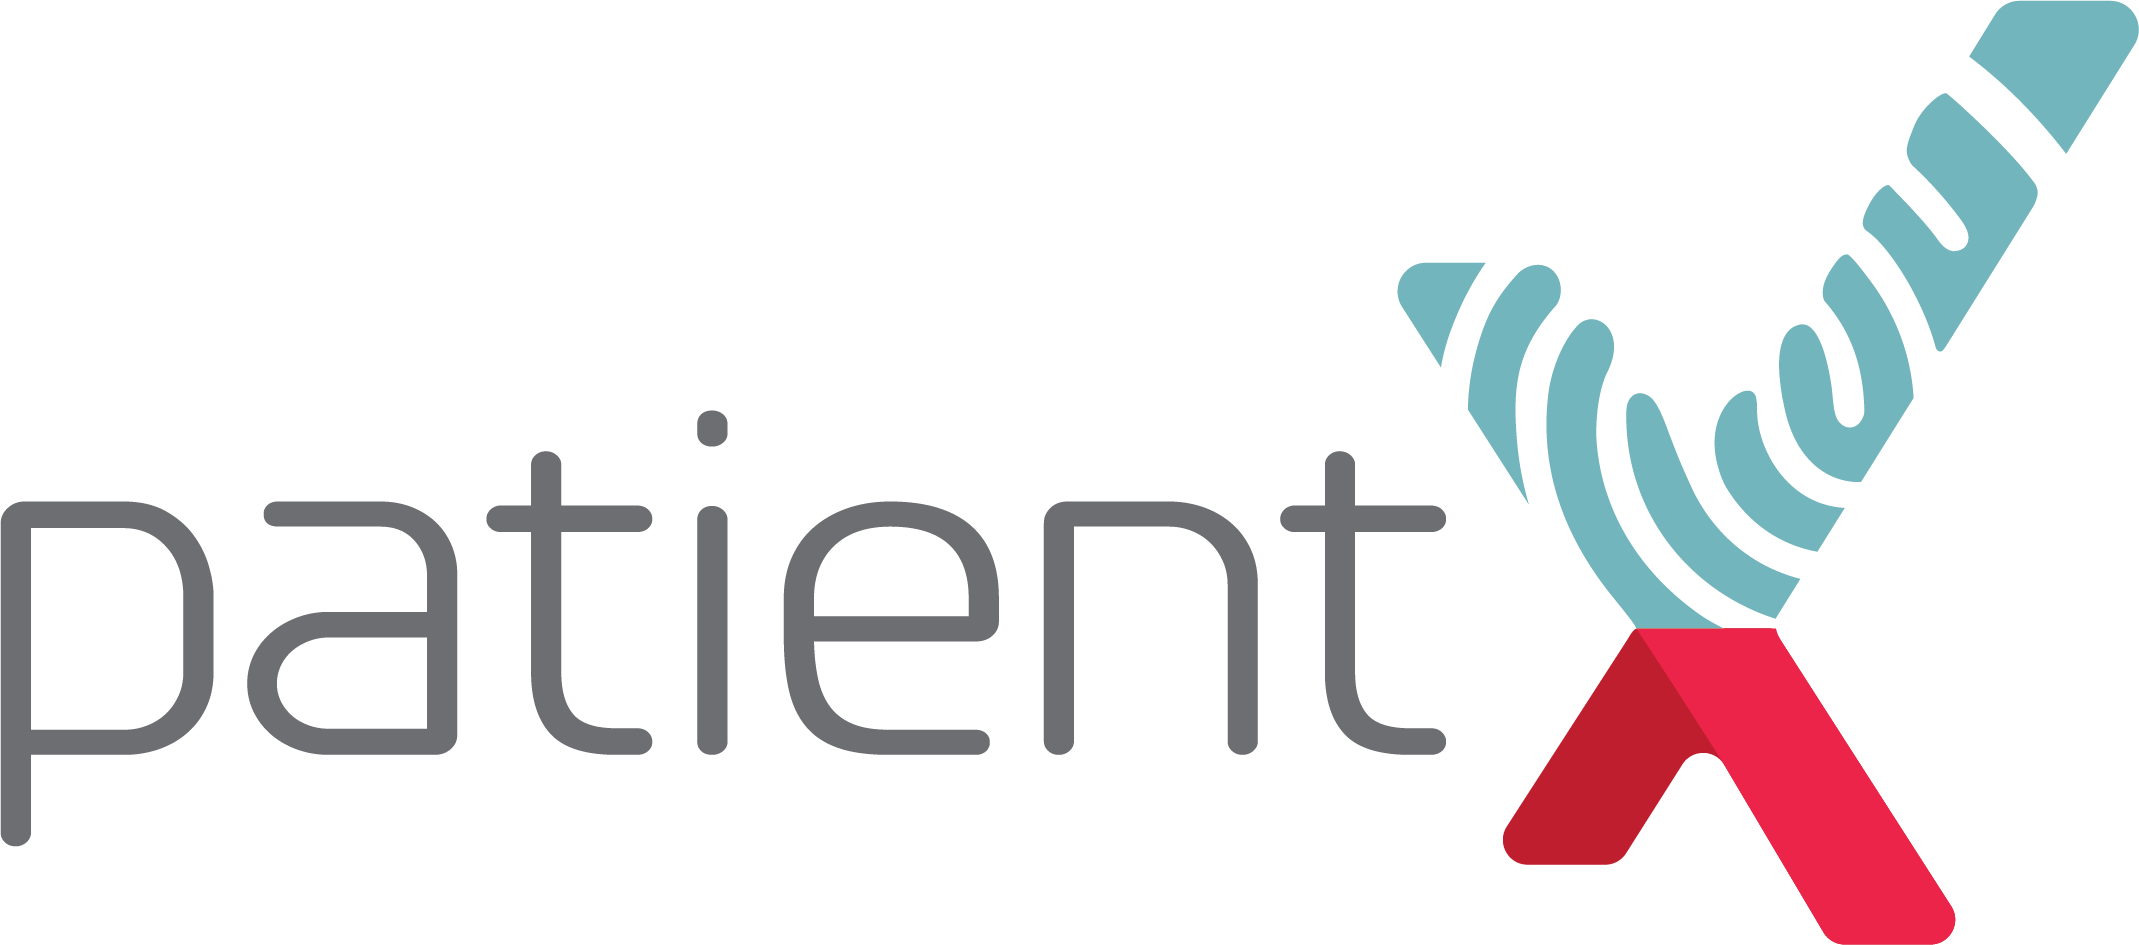 PatientX Agency Logo